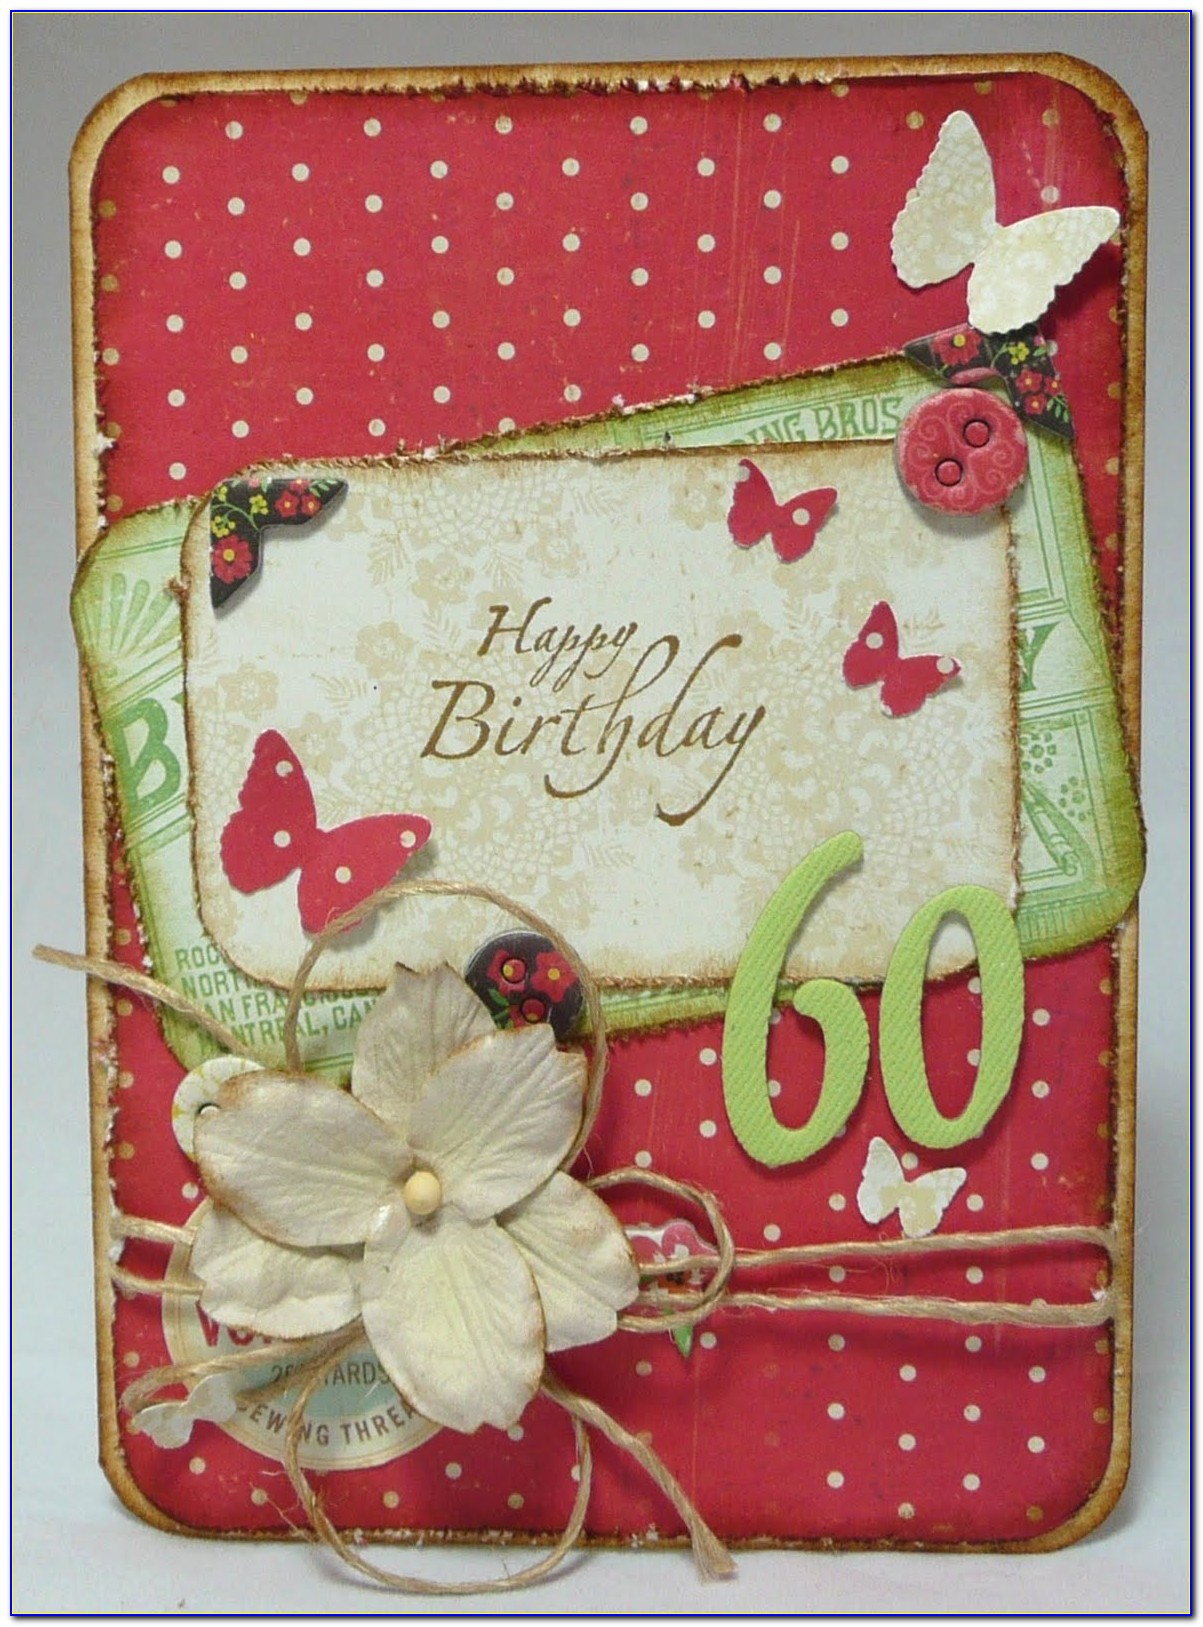 Happy Birthday Invitation Cards Images